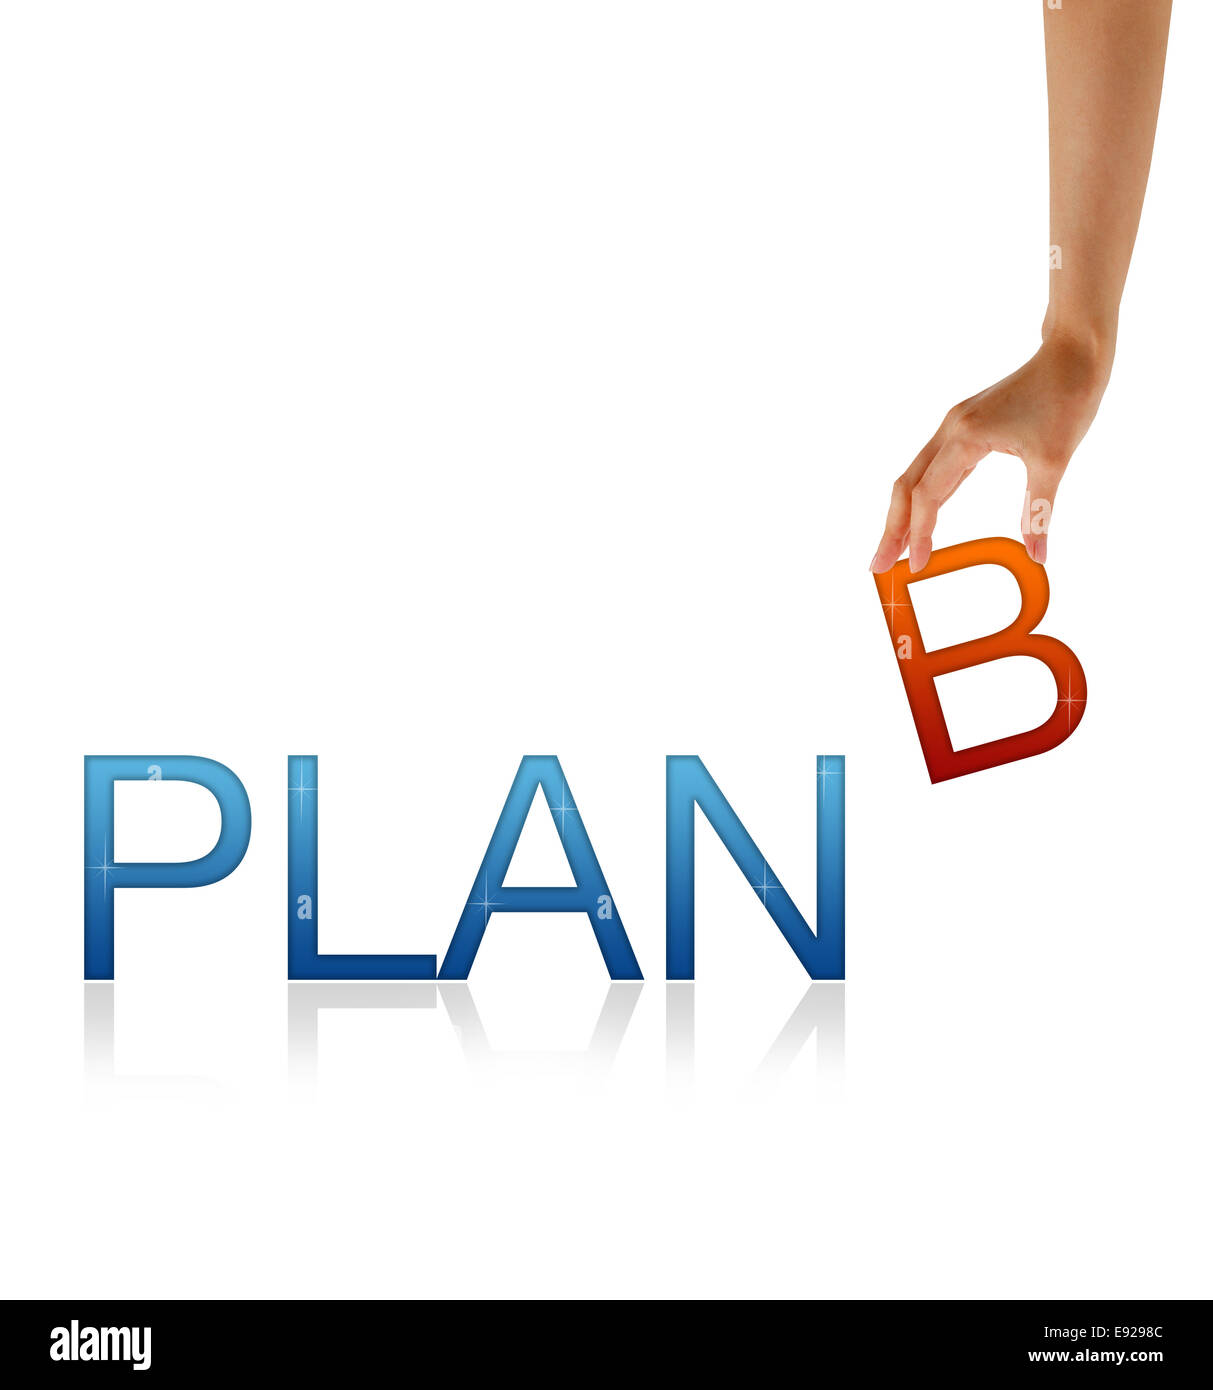 Plan B - Hand Stock Photo